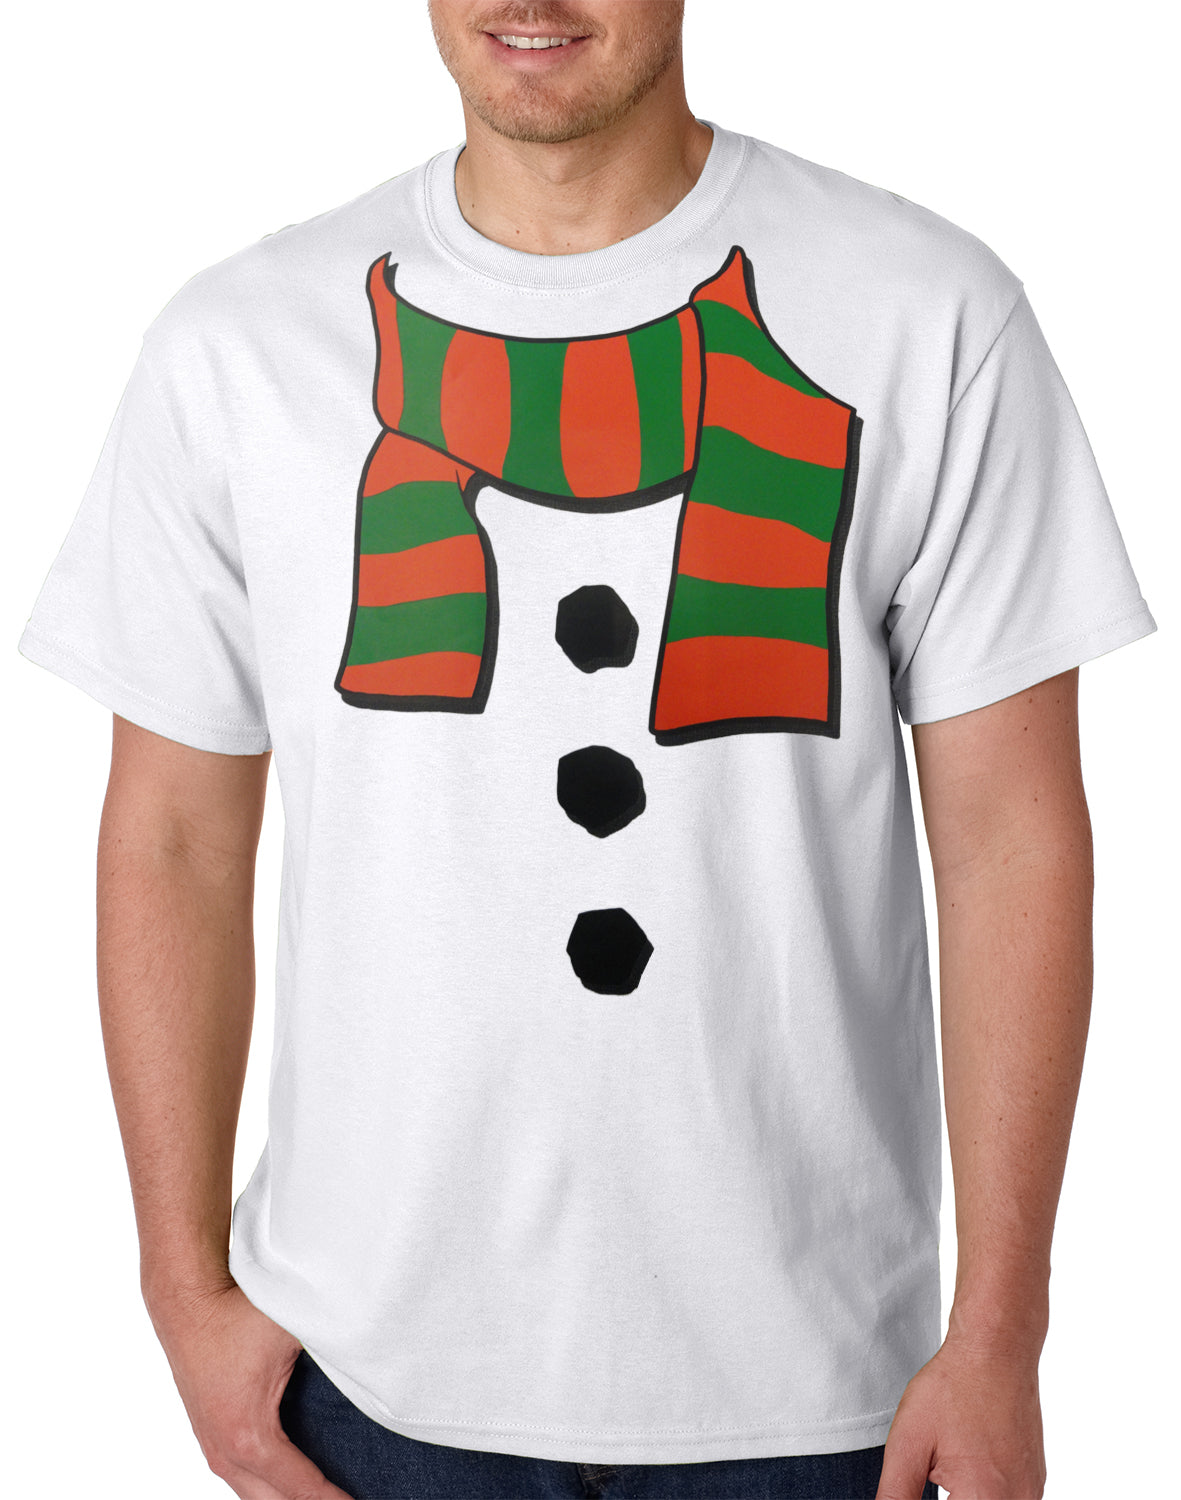 Snowman Costume Mens T-shirt